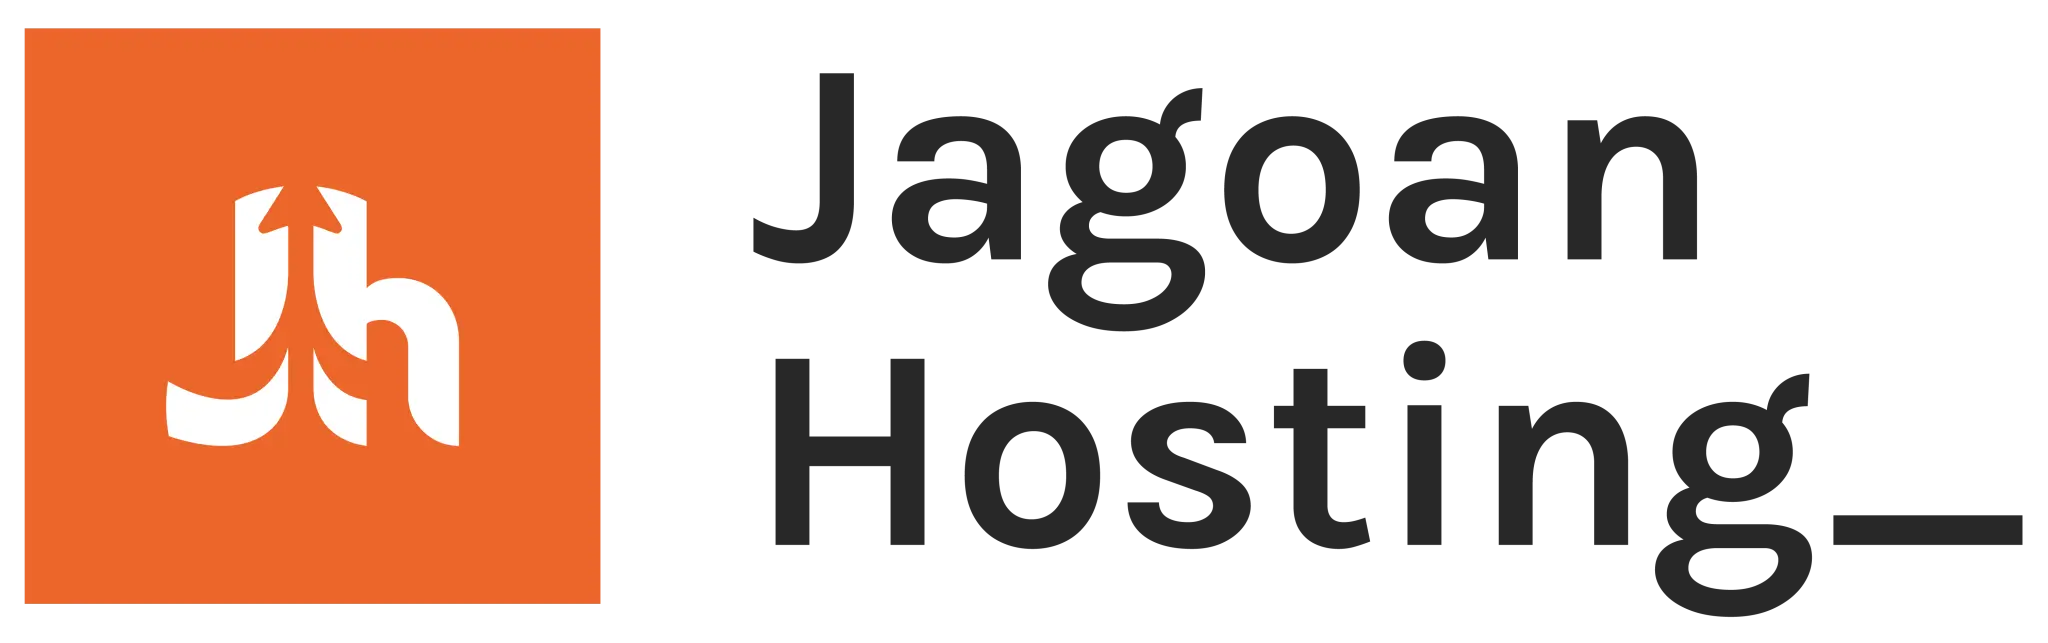 Blog Jagoan Hosting | Tutorial Website & Web Hosting Indonesia